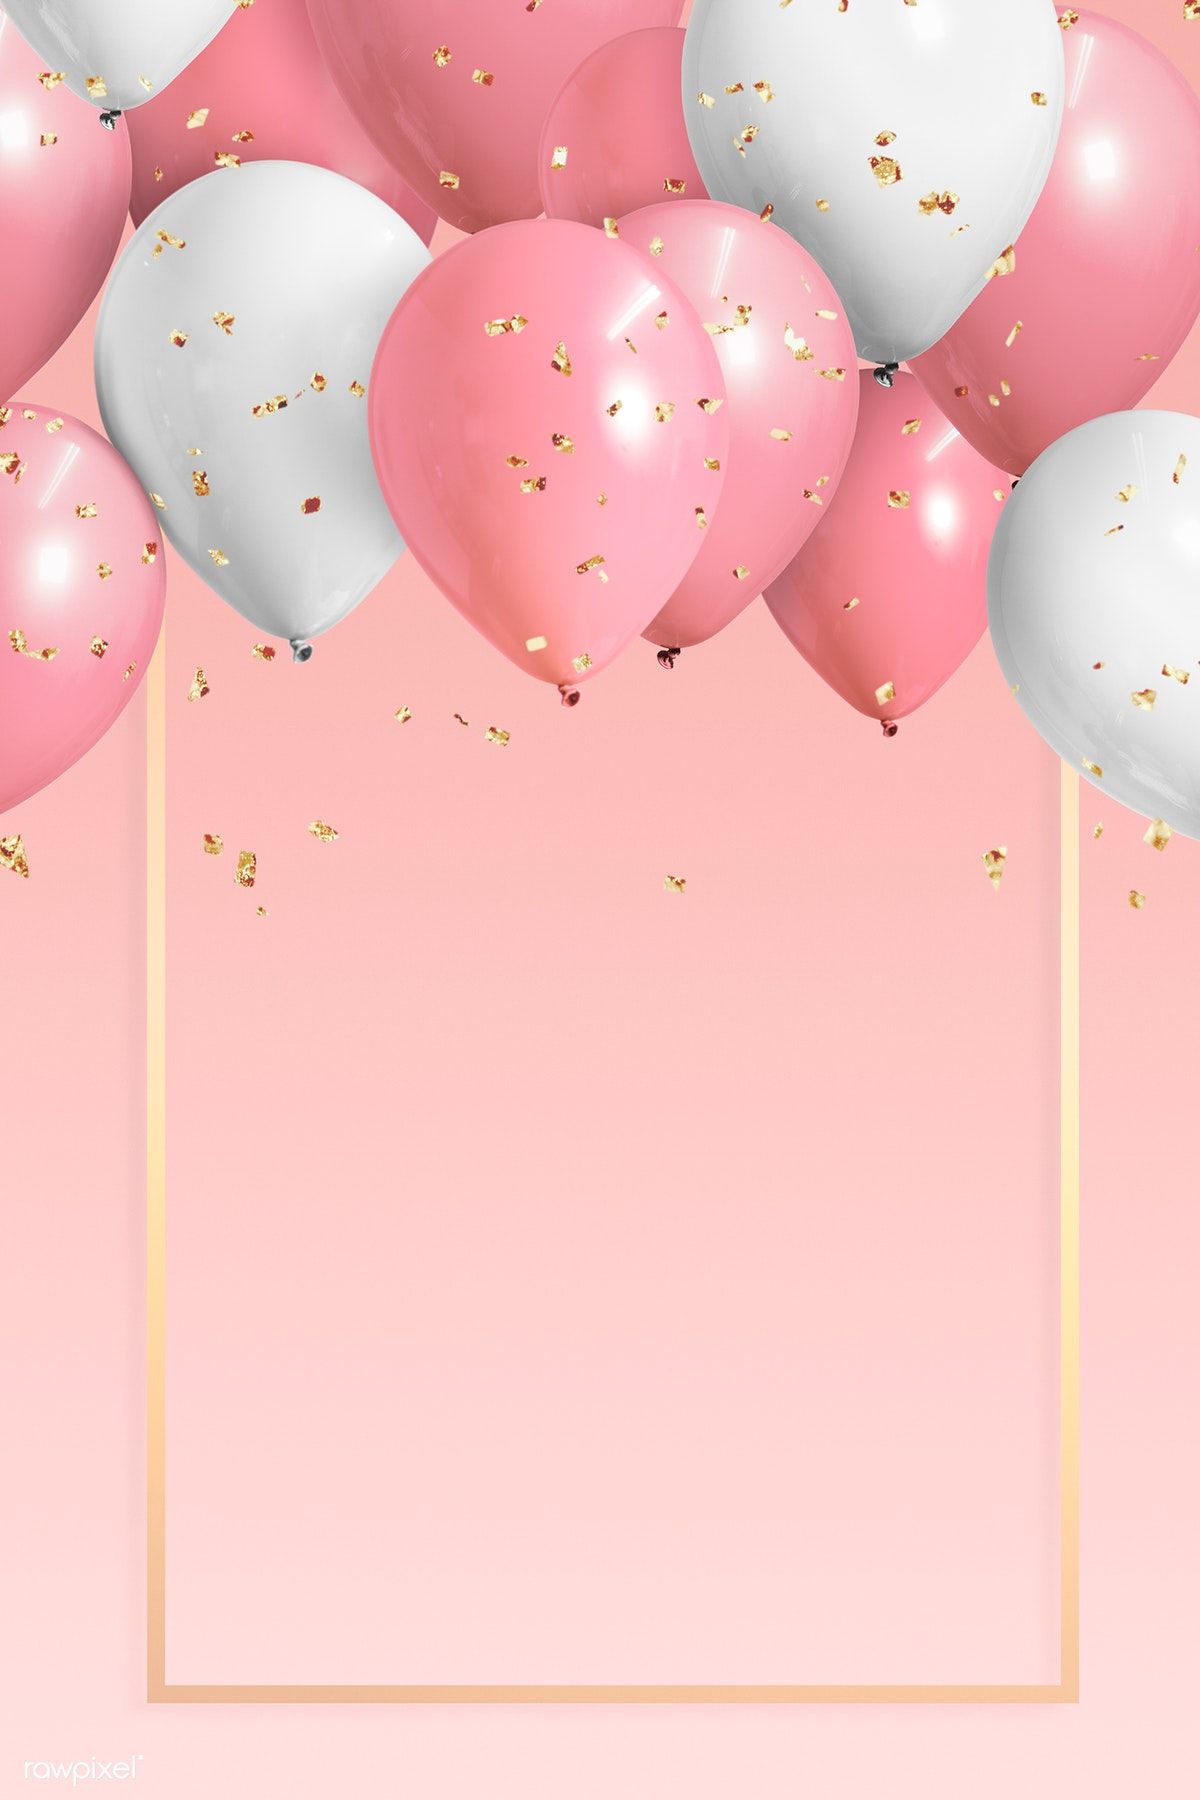 Download premium illustration of Golden frame balloons on a pink